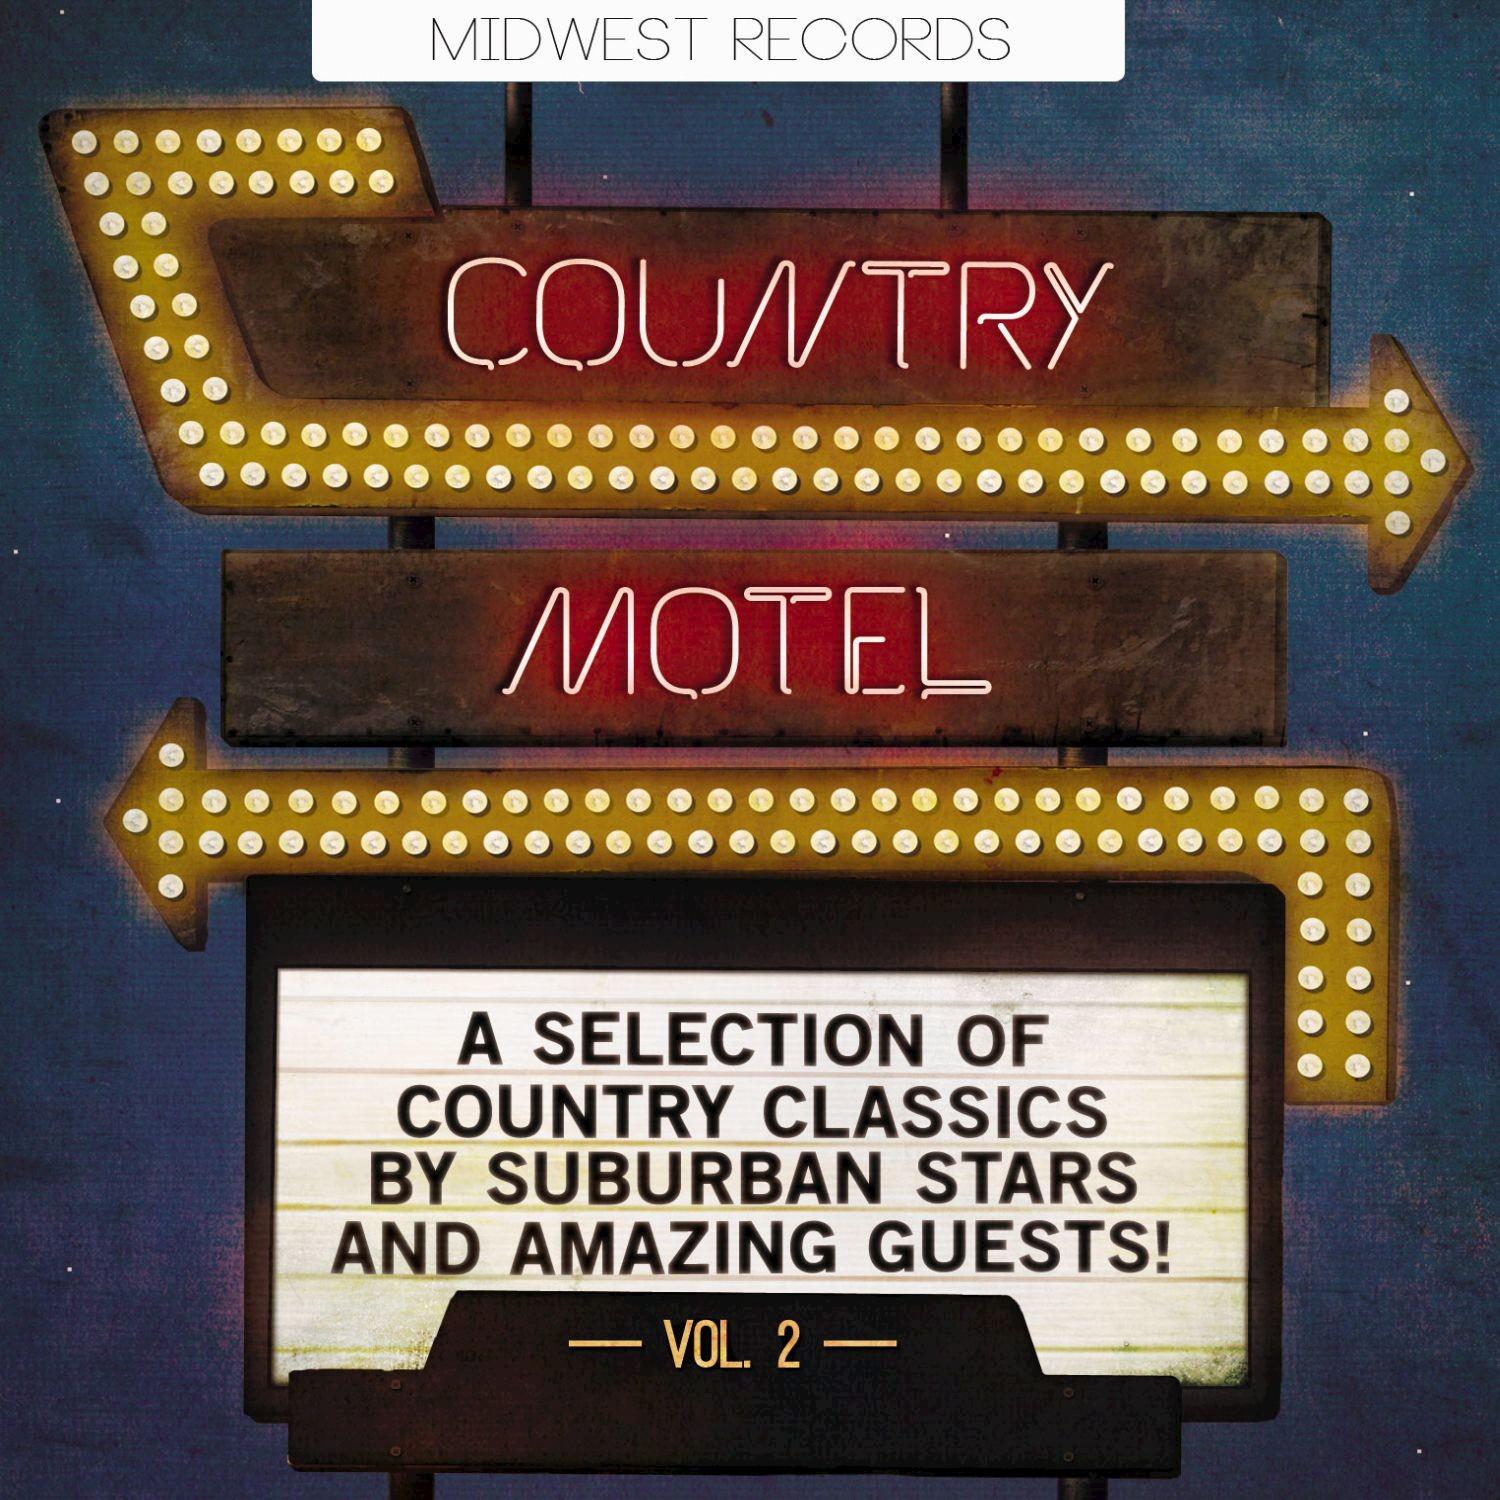 Country Motel Vol. 2